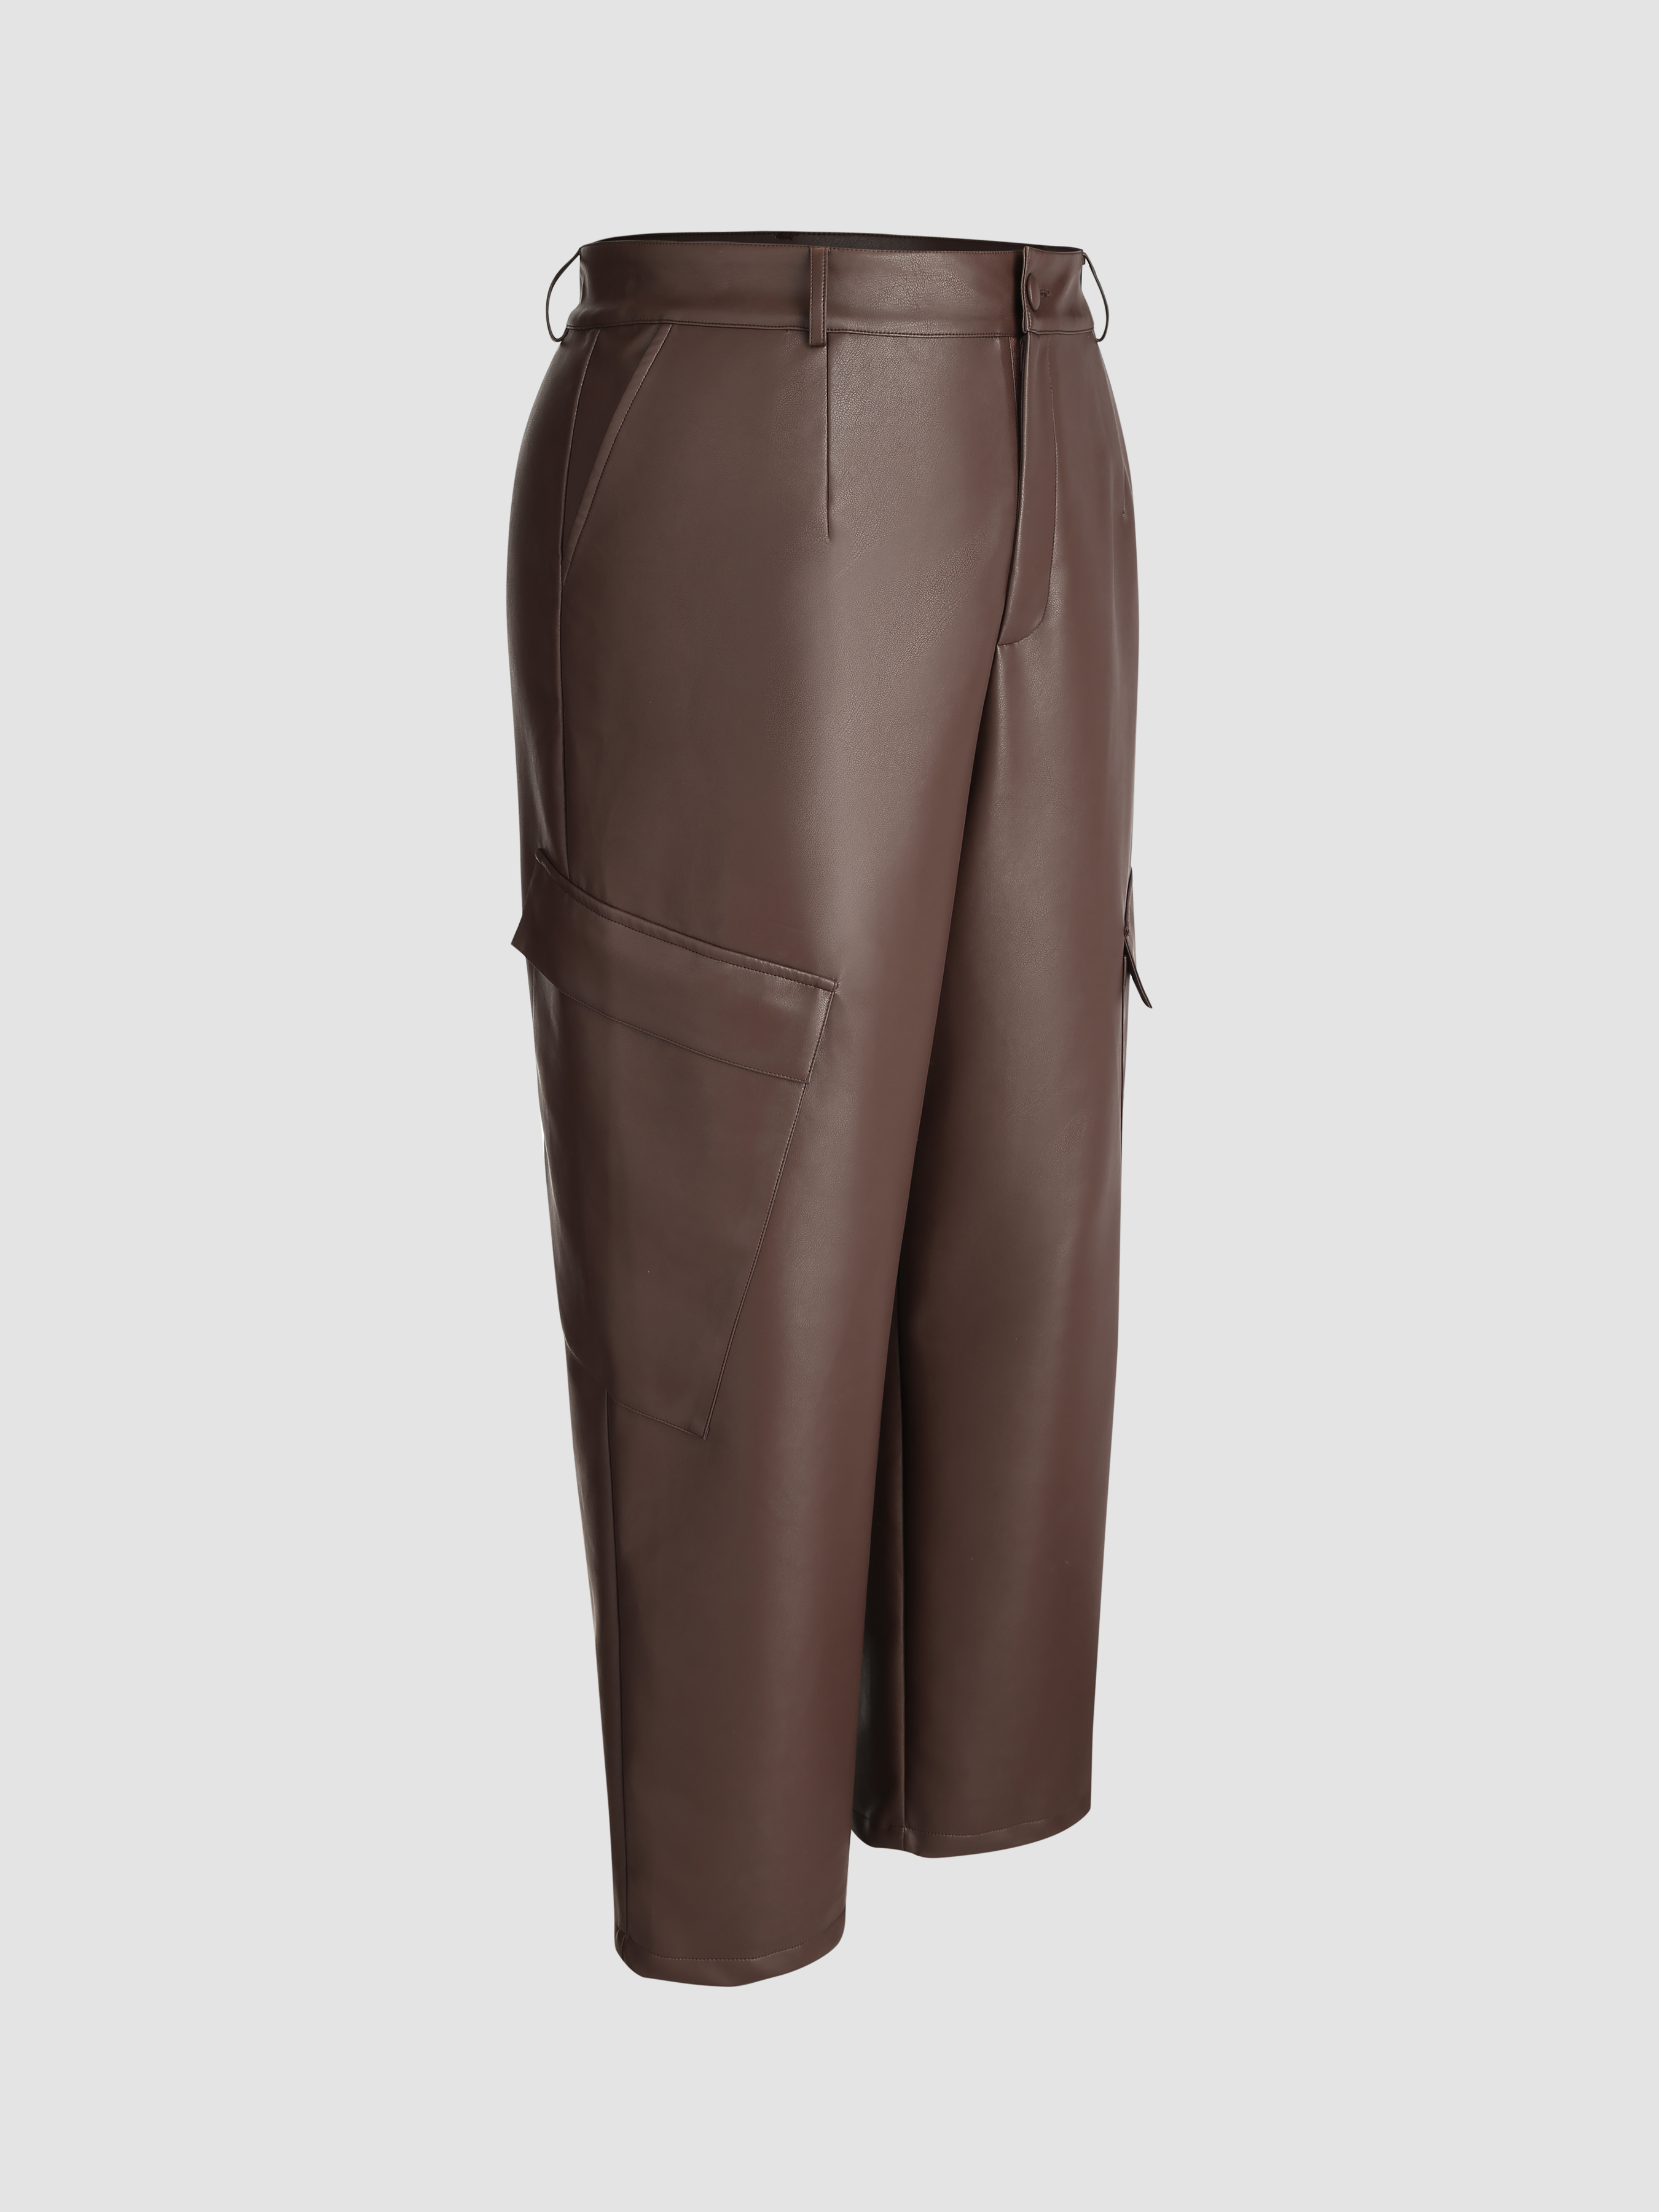 Plus Size Midsize Cider Haul Faux Leather Skirt Leather Pants Size